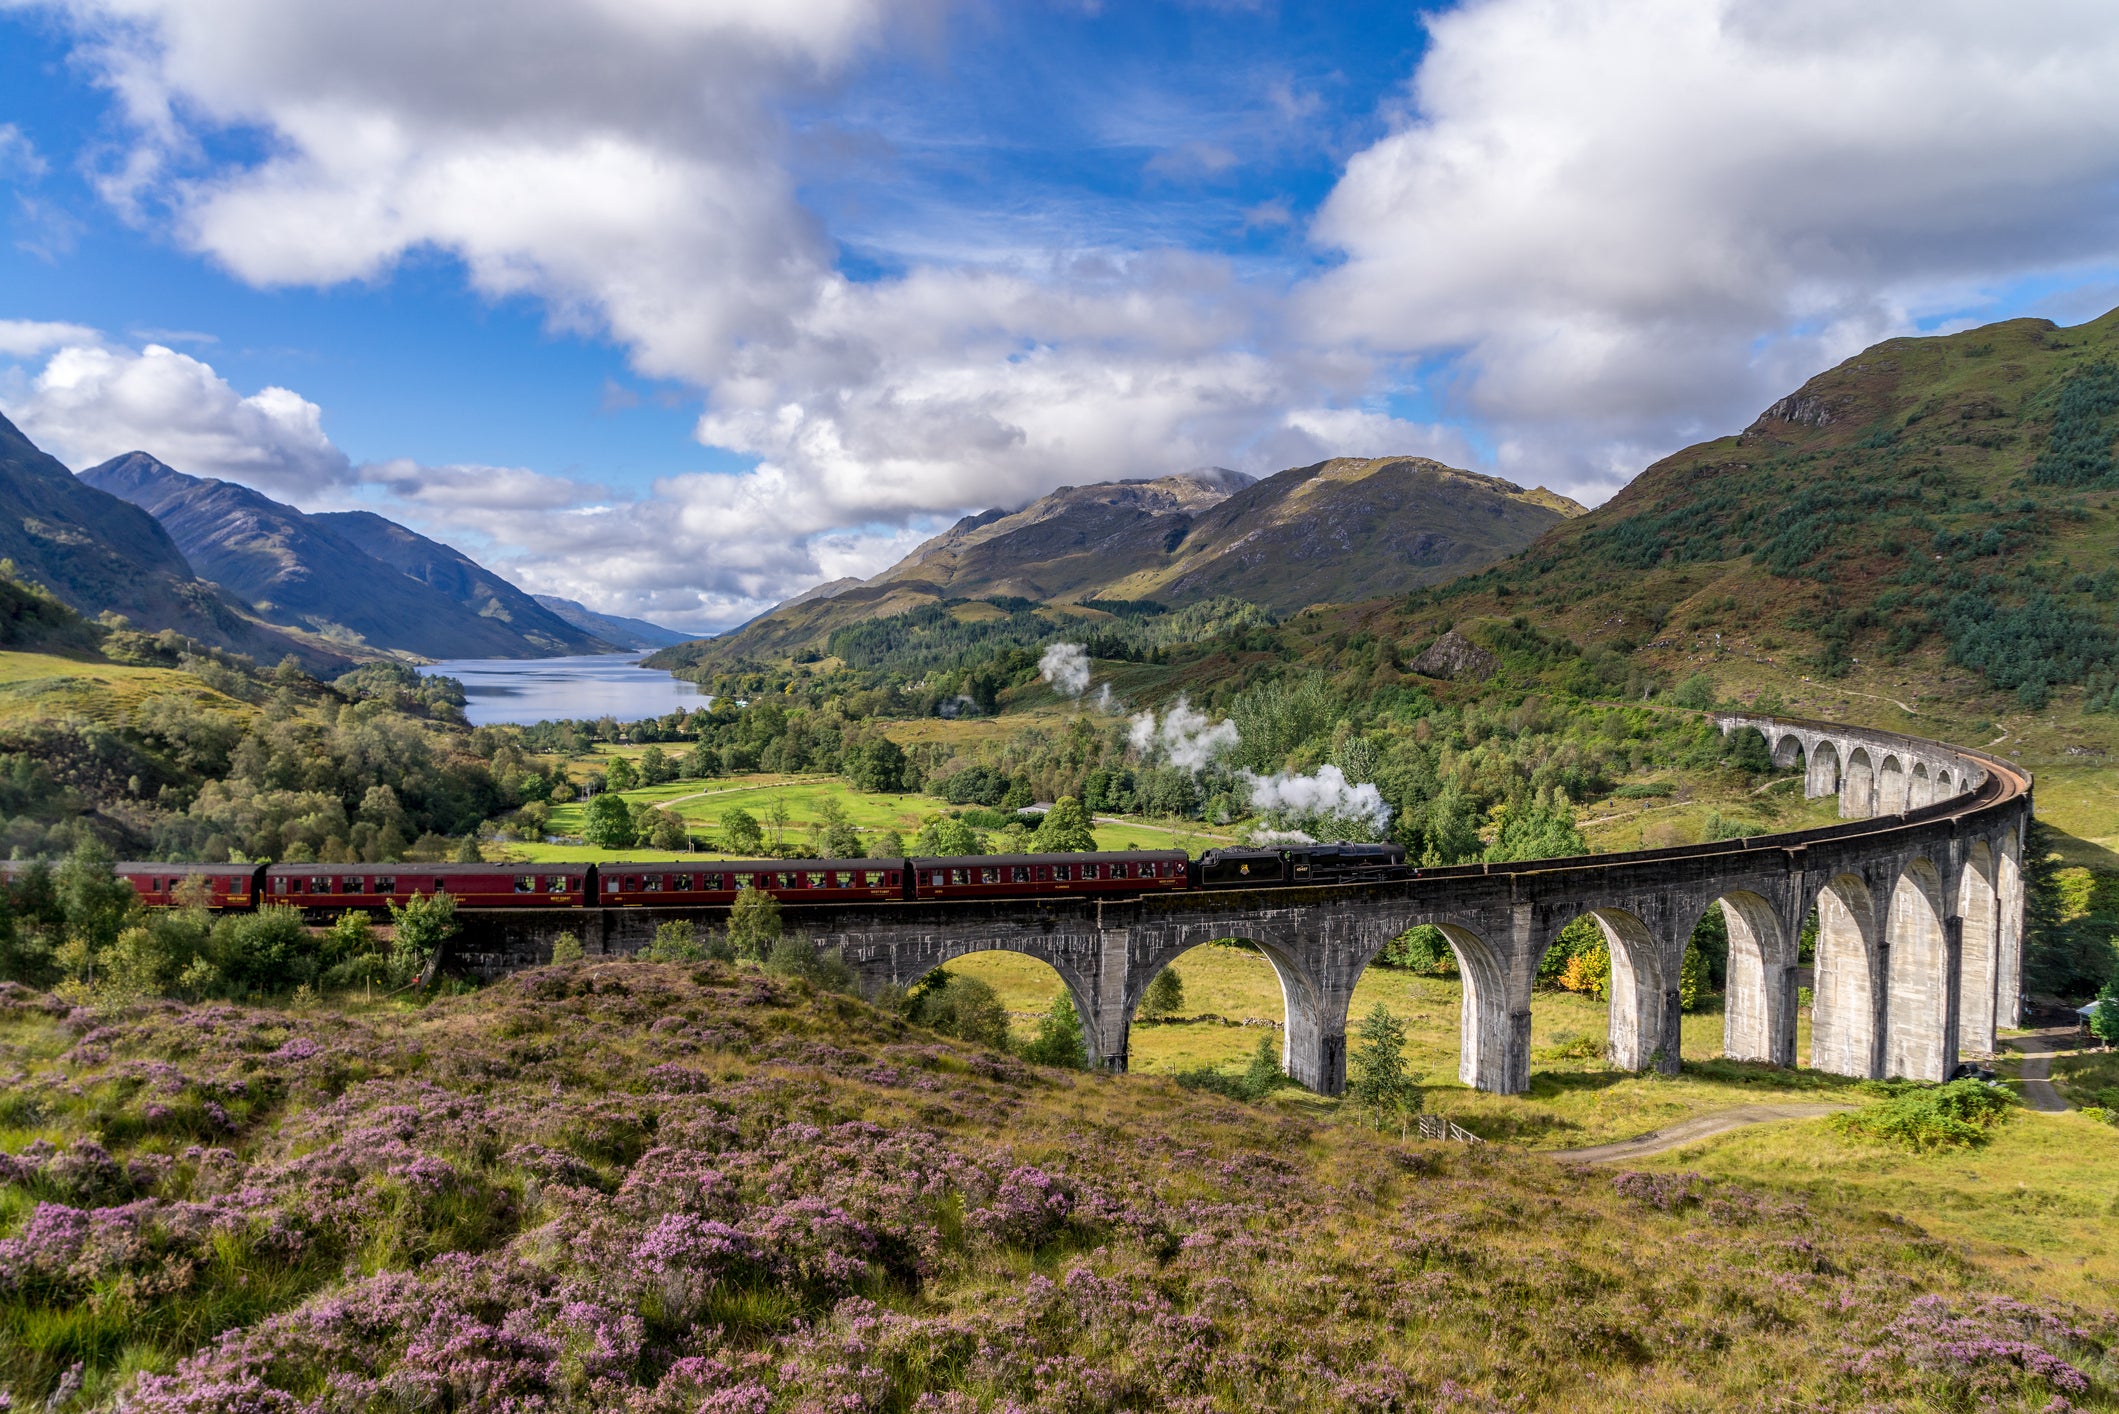 The Glenfinnan railway viaduct in Scotland